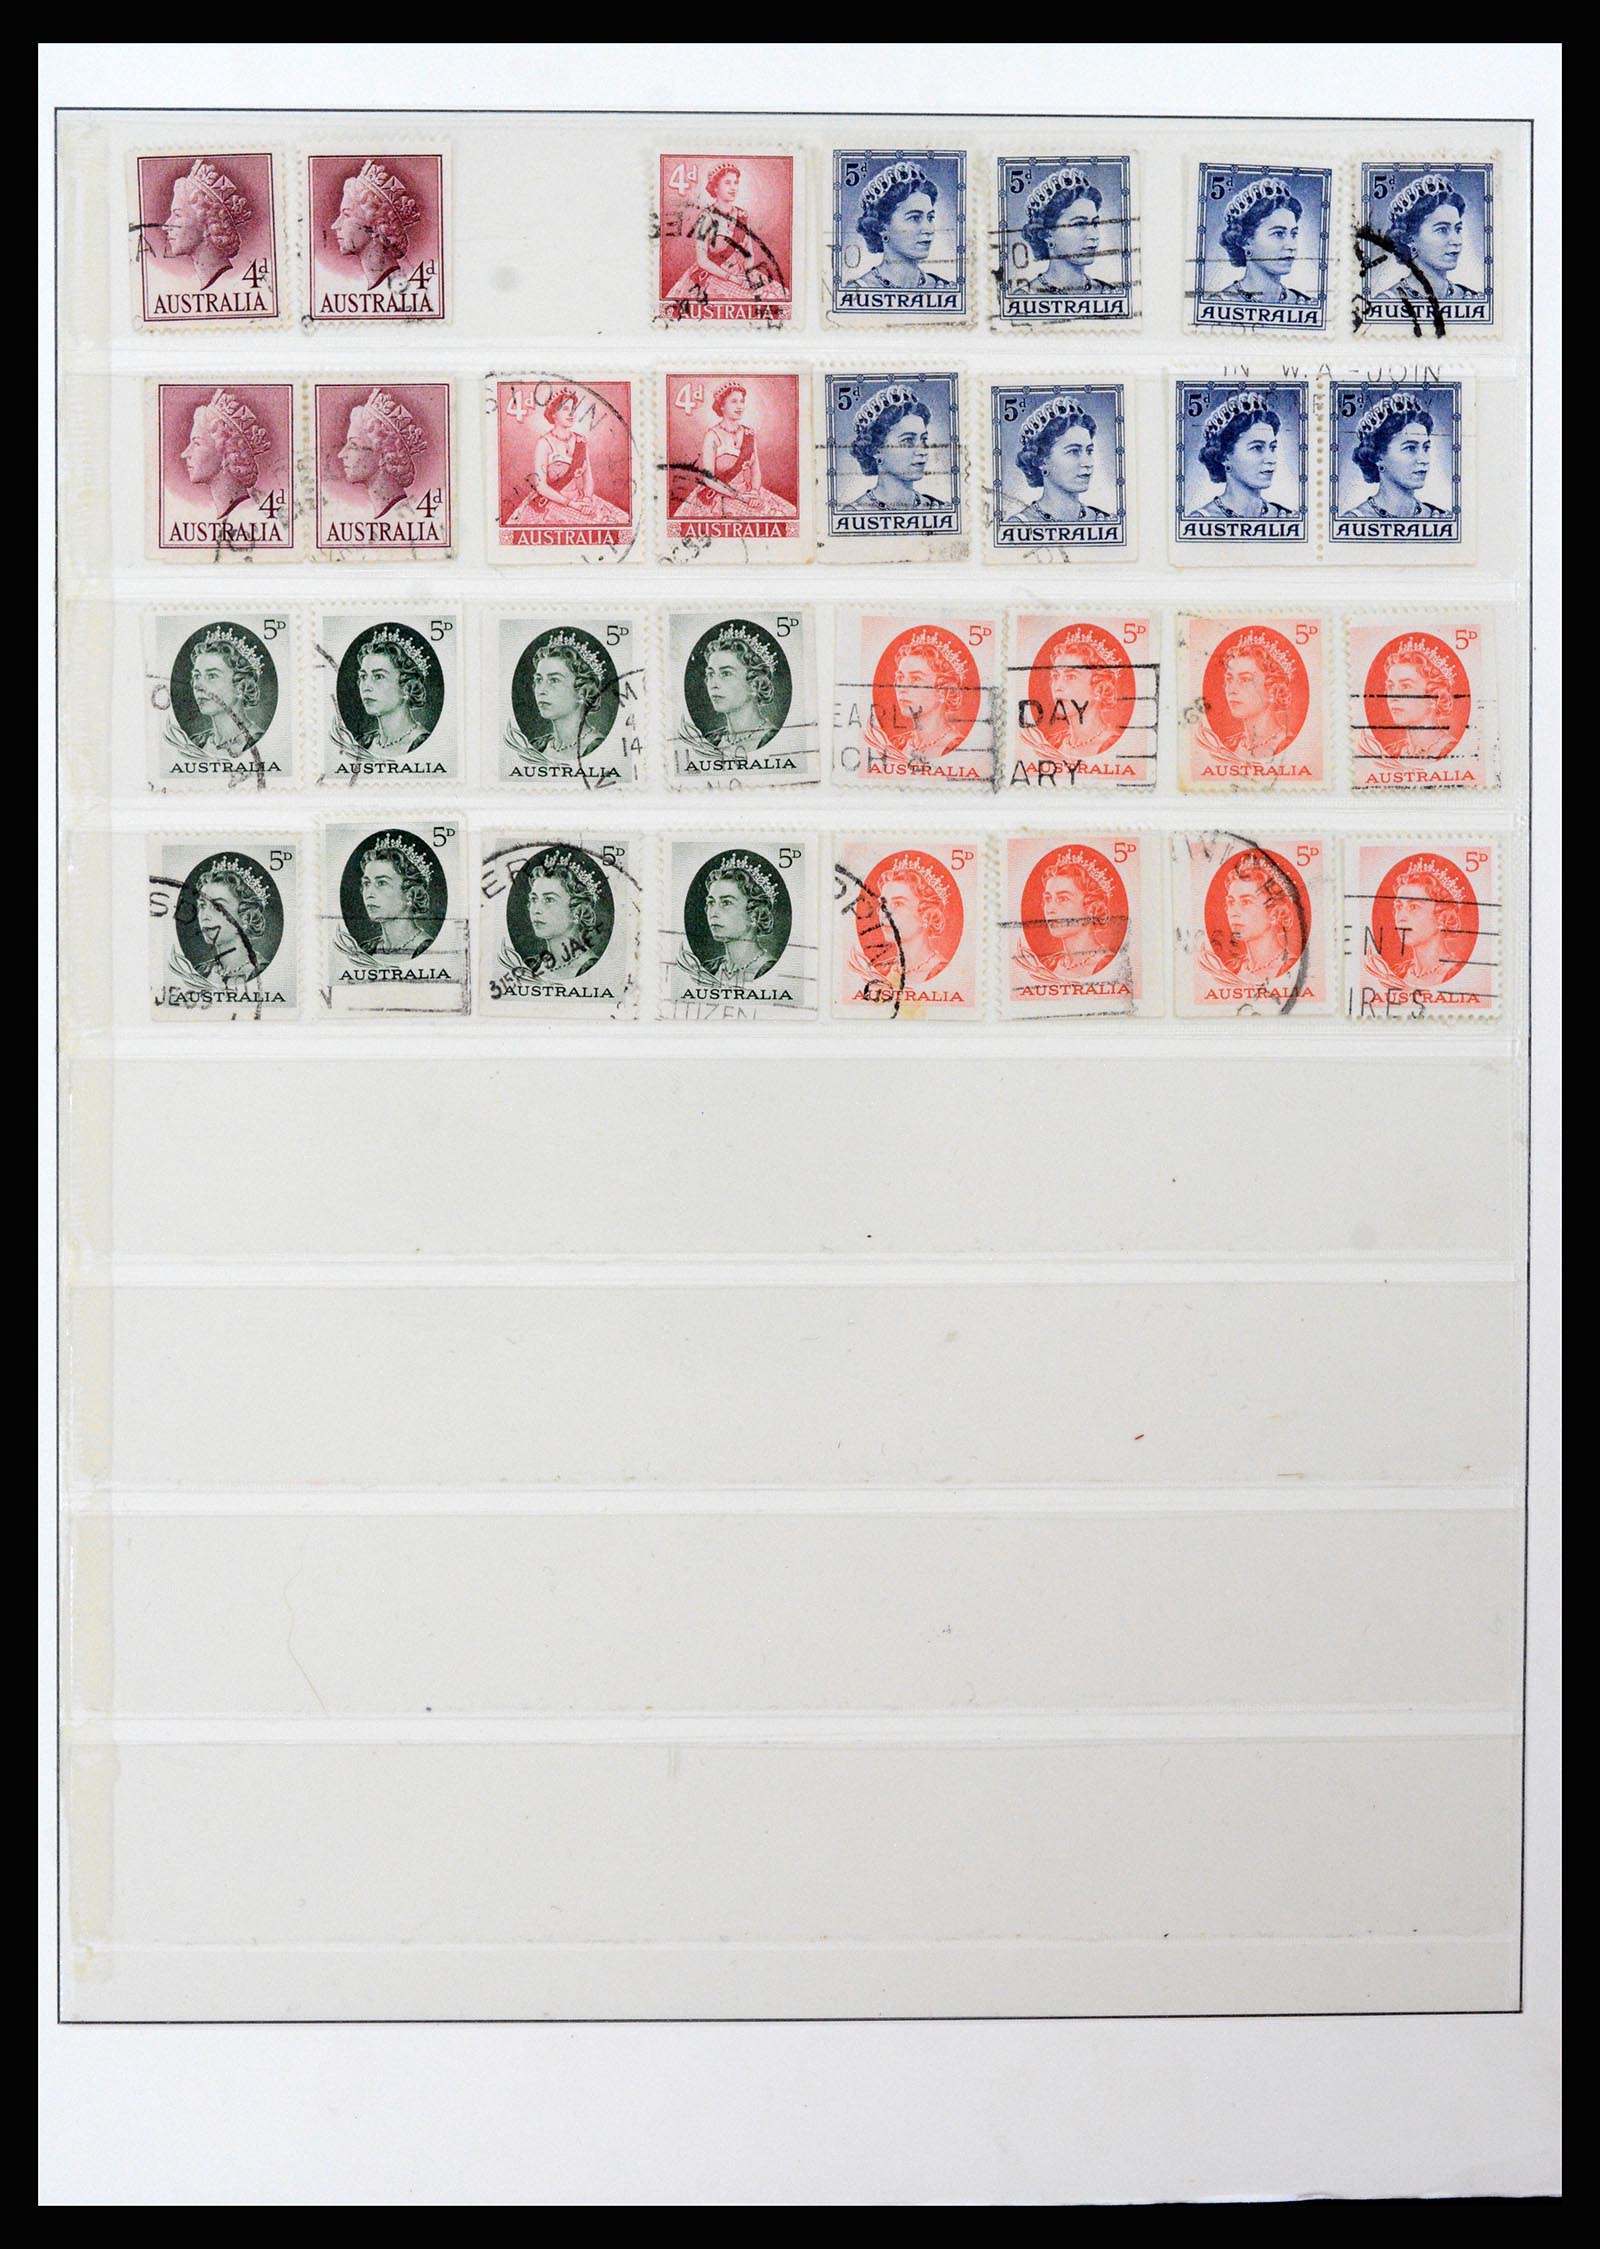 37259 005 - Stamp collection 37259 Australia 1951-2006.